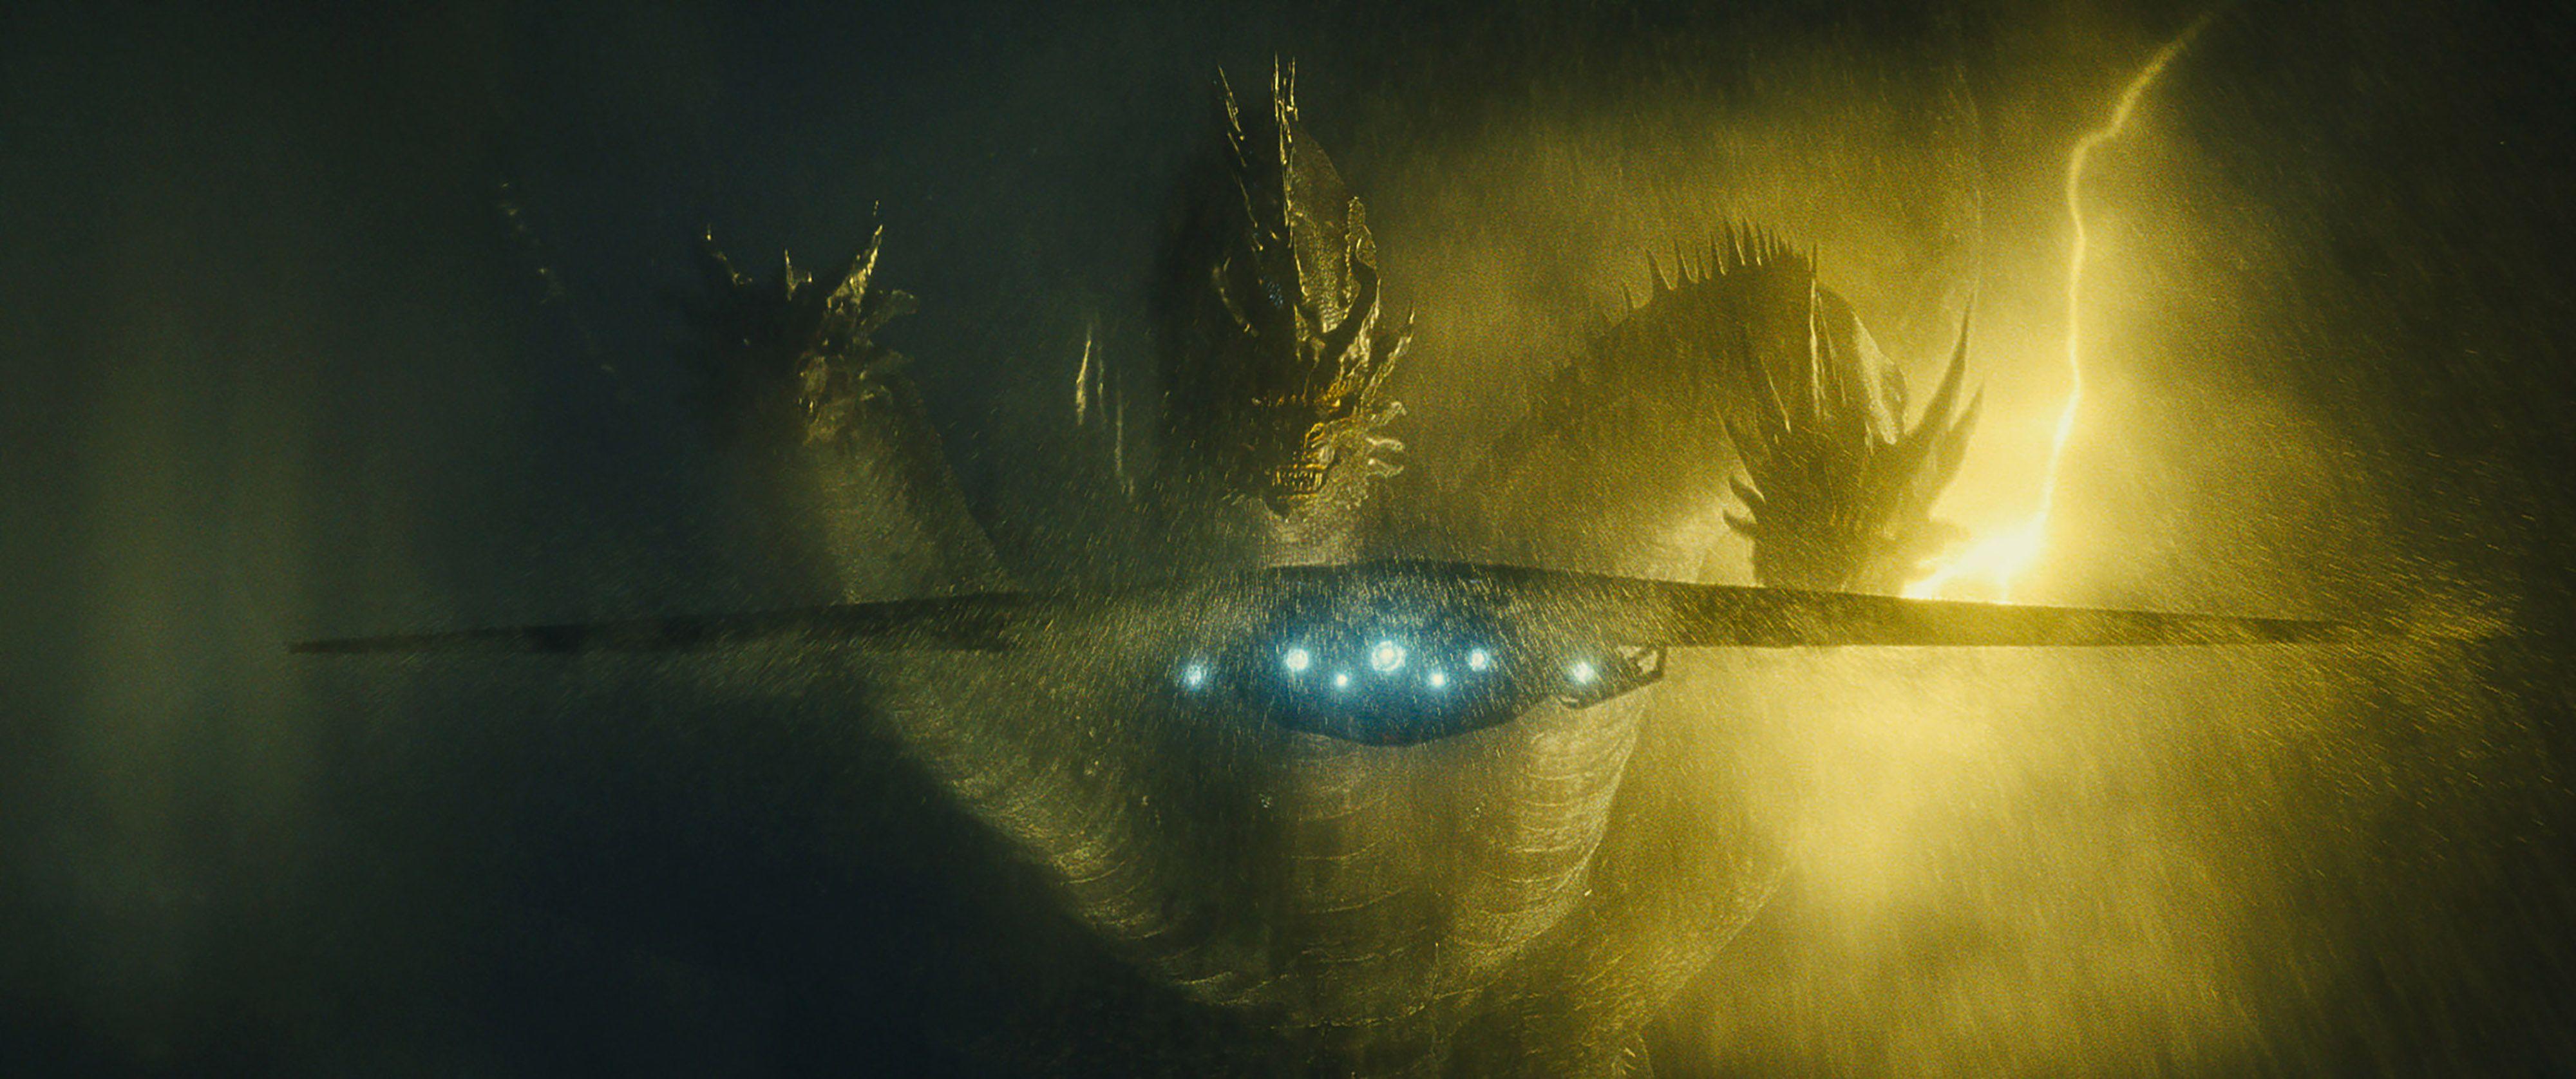 Godzilla vs. King Ghidorah In Monstrous New Image. Cosmic Book News